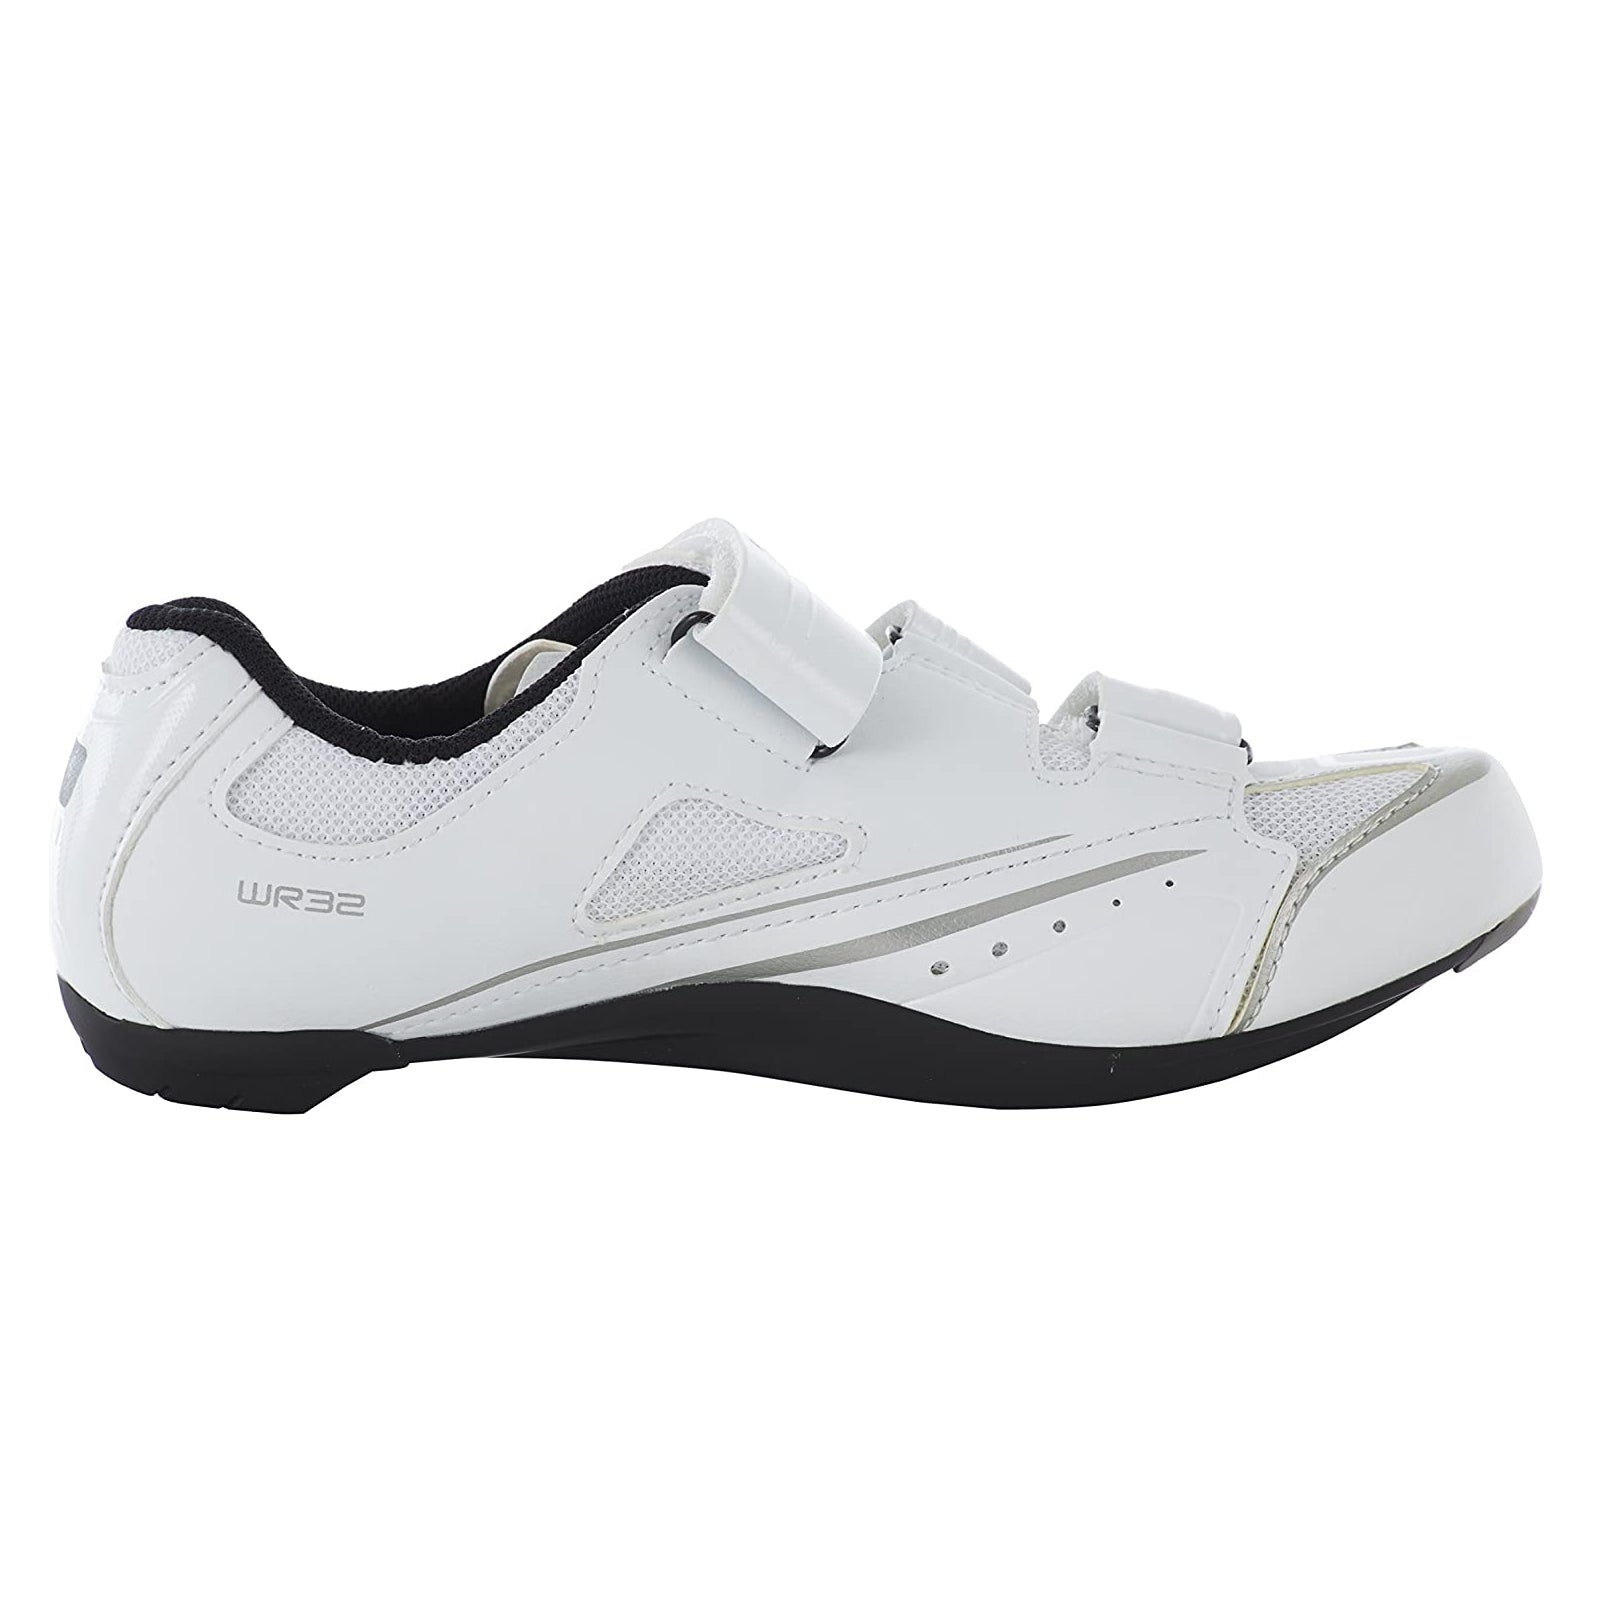 Shimano cycling shoe SH-WR32W, women, white/black, size 38